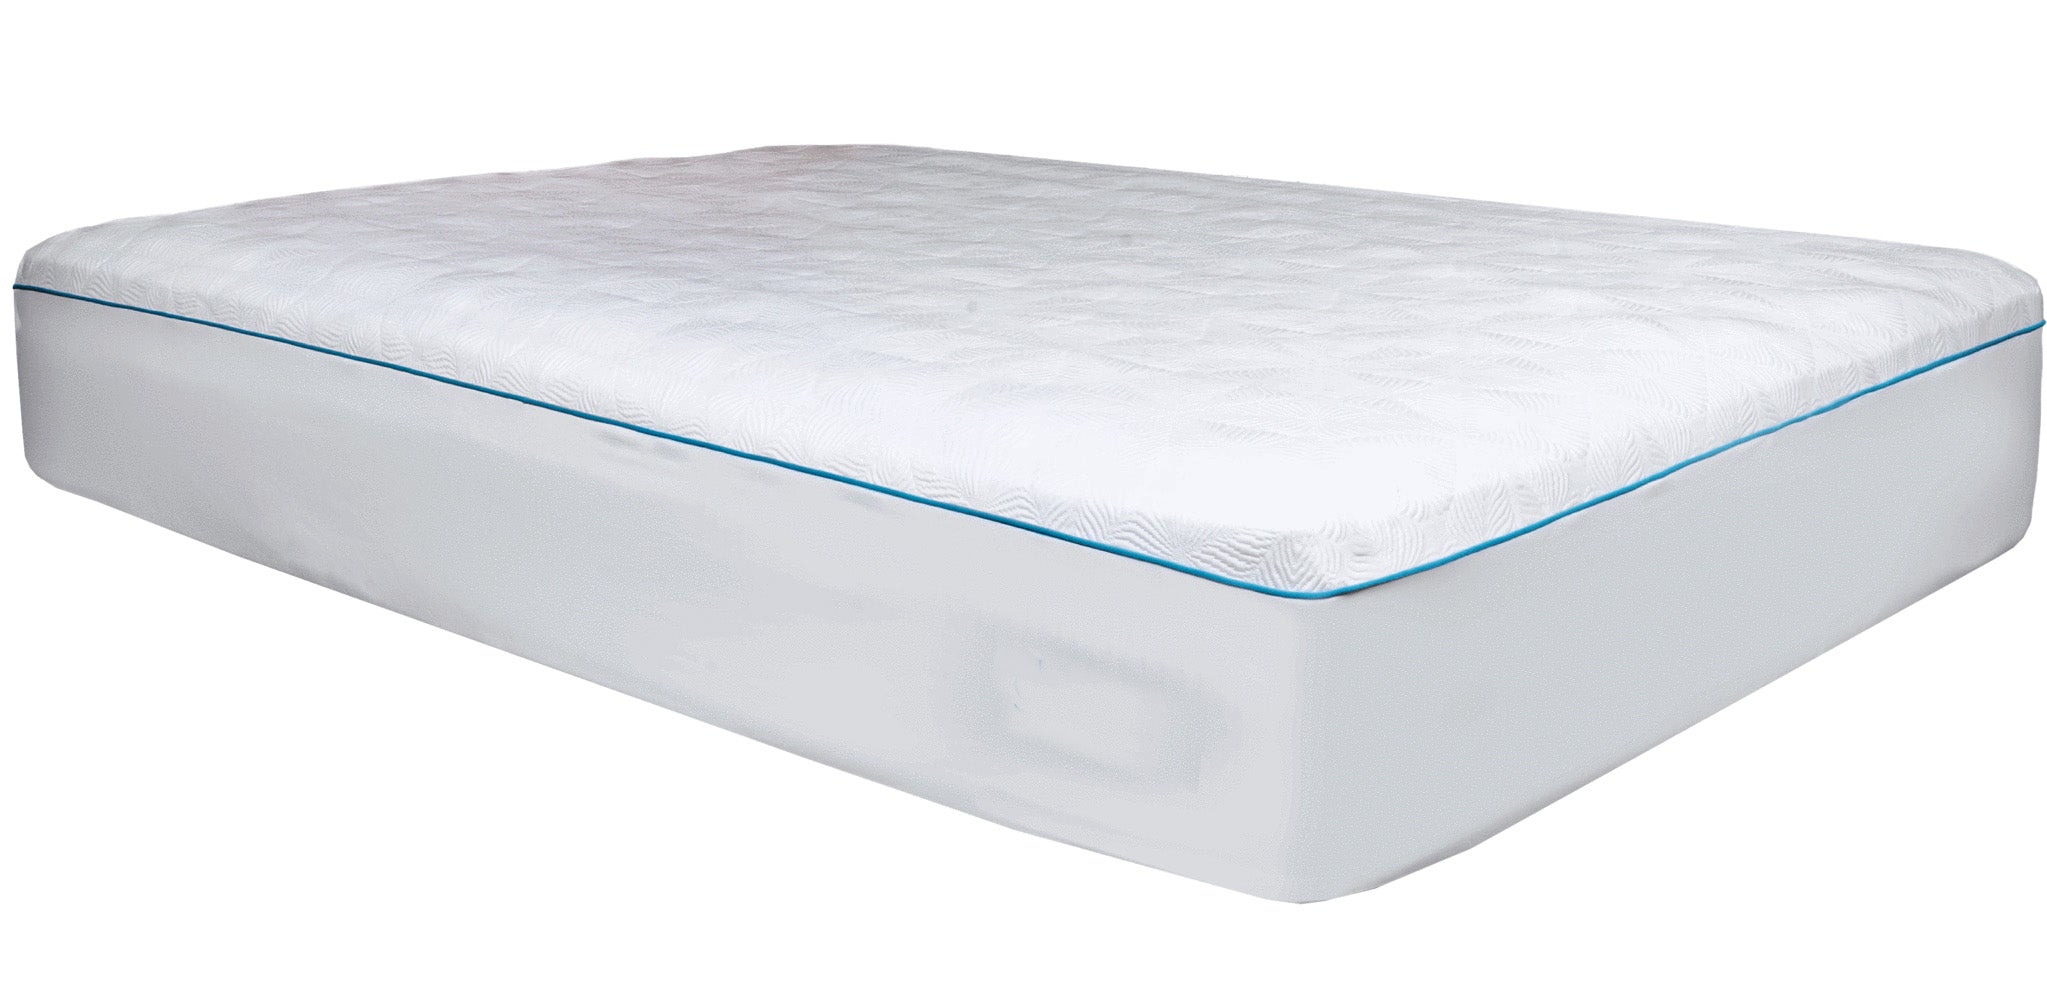 therm a sleep ice mattress protector